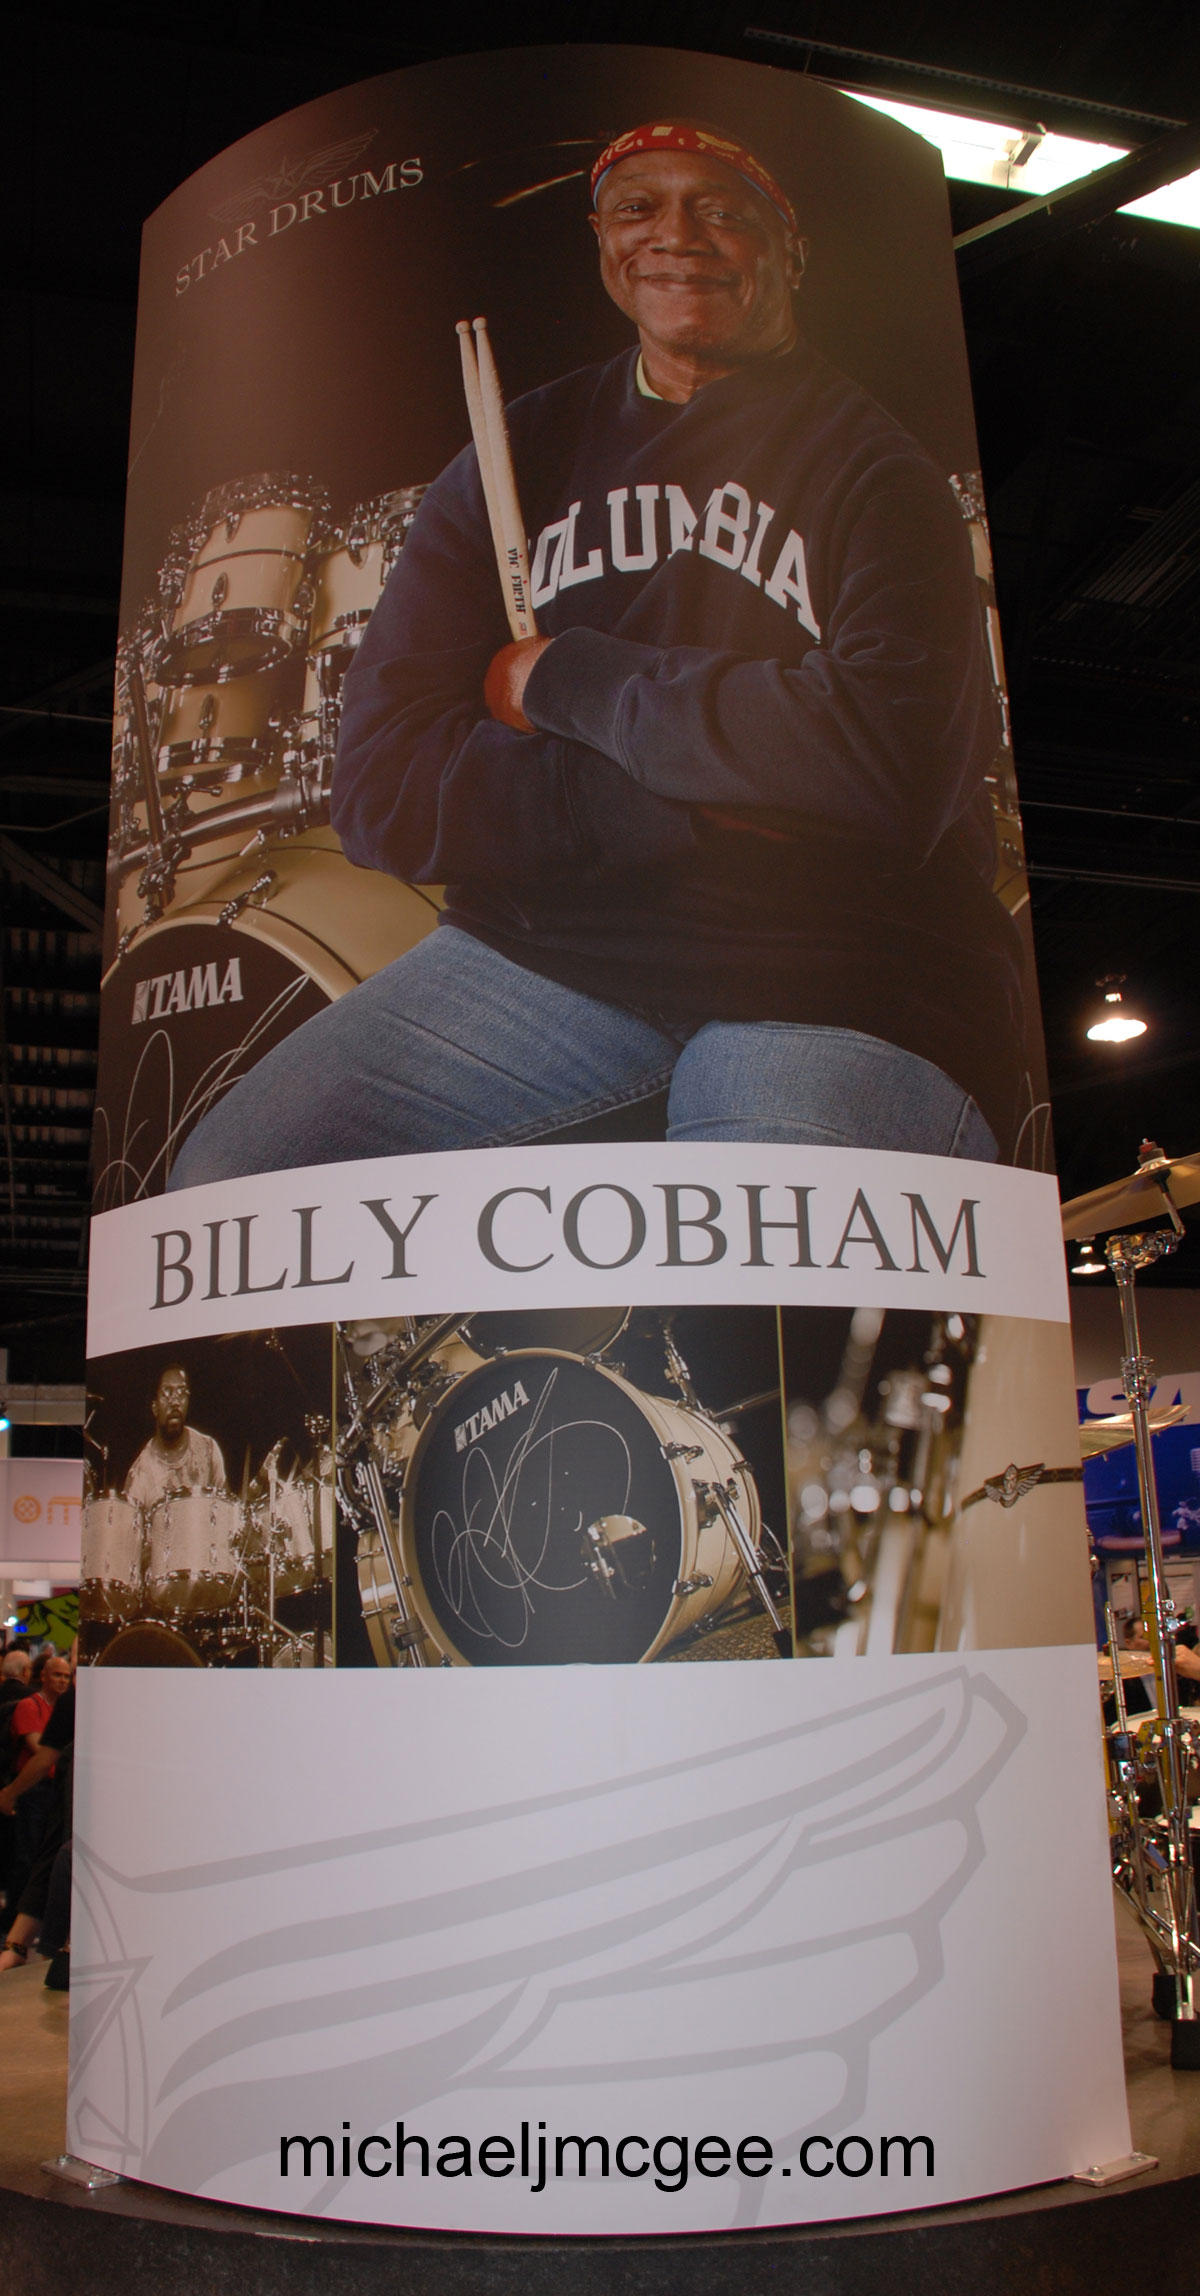 Billy Cobham / michaeljmcgee.com